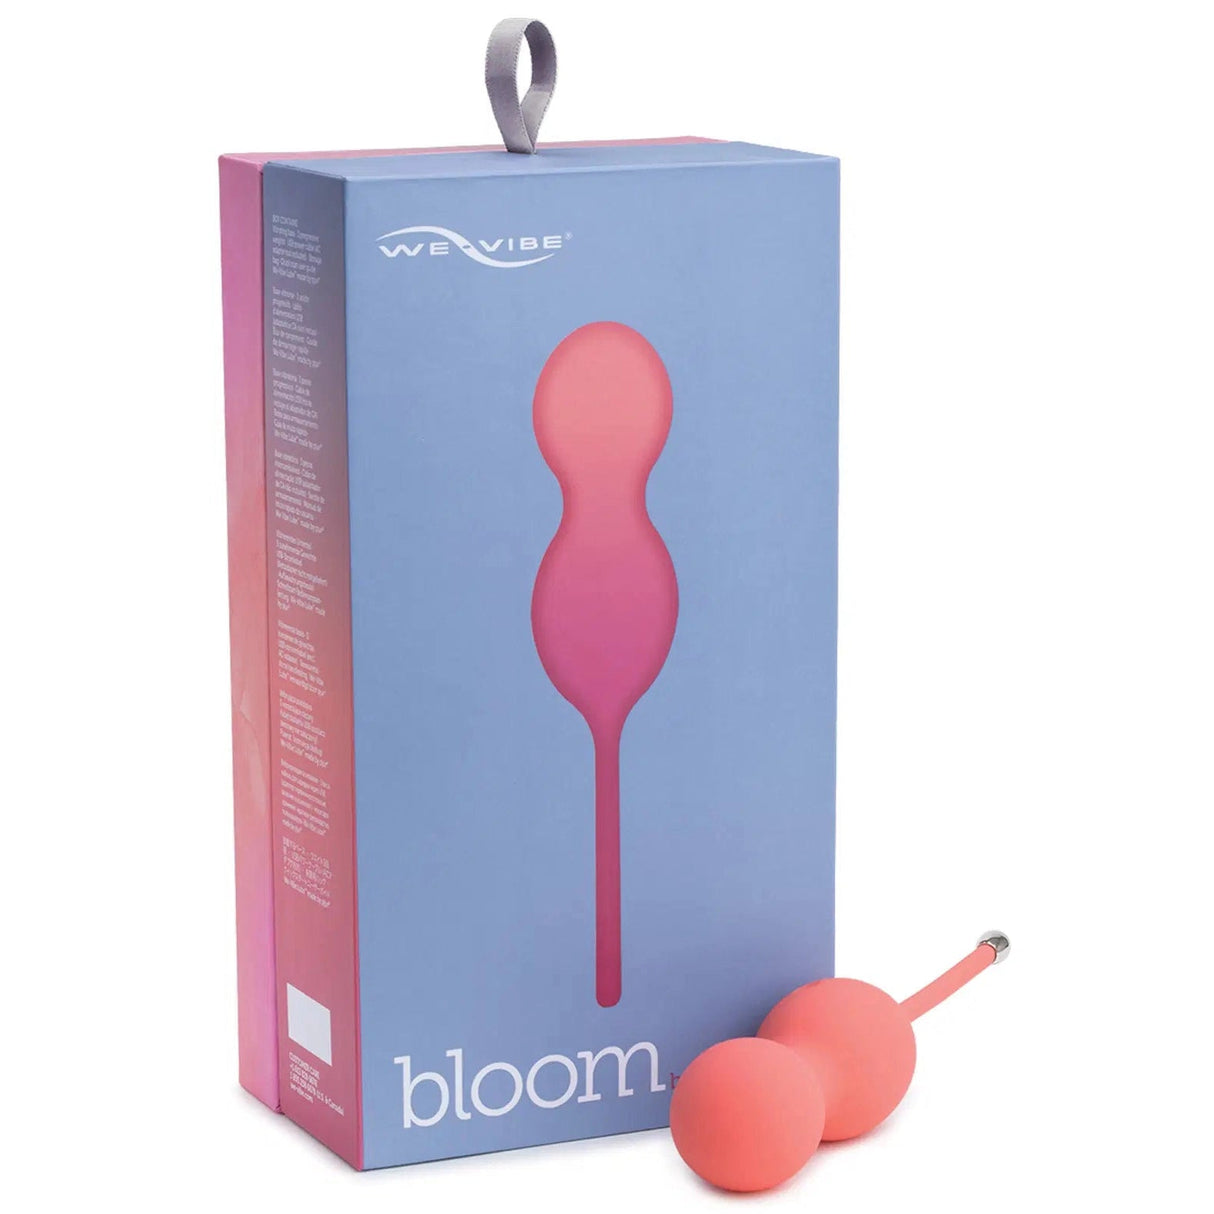 We-Vibe Bloom Vibrating Ben Wa Balls